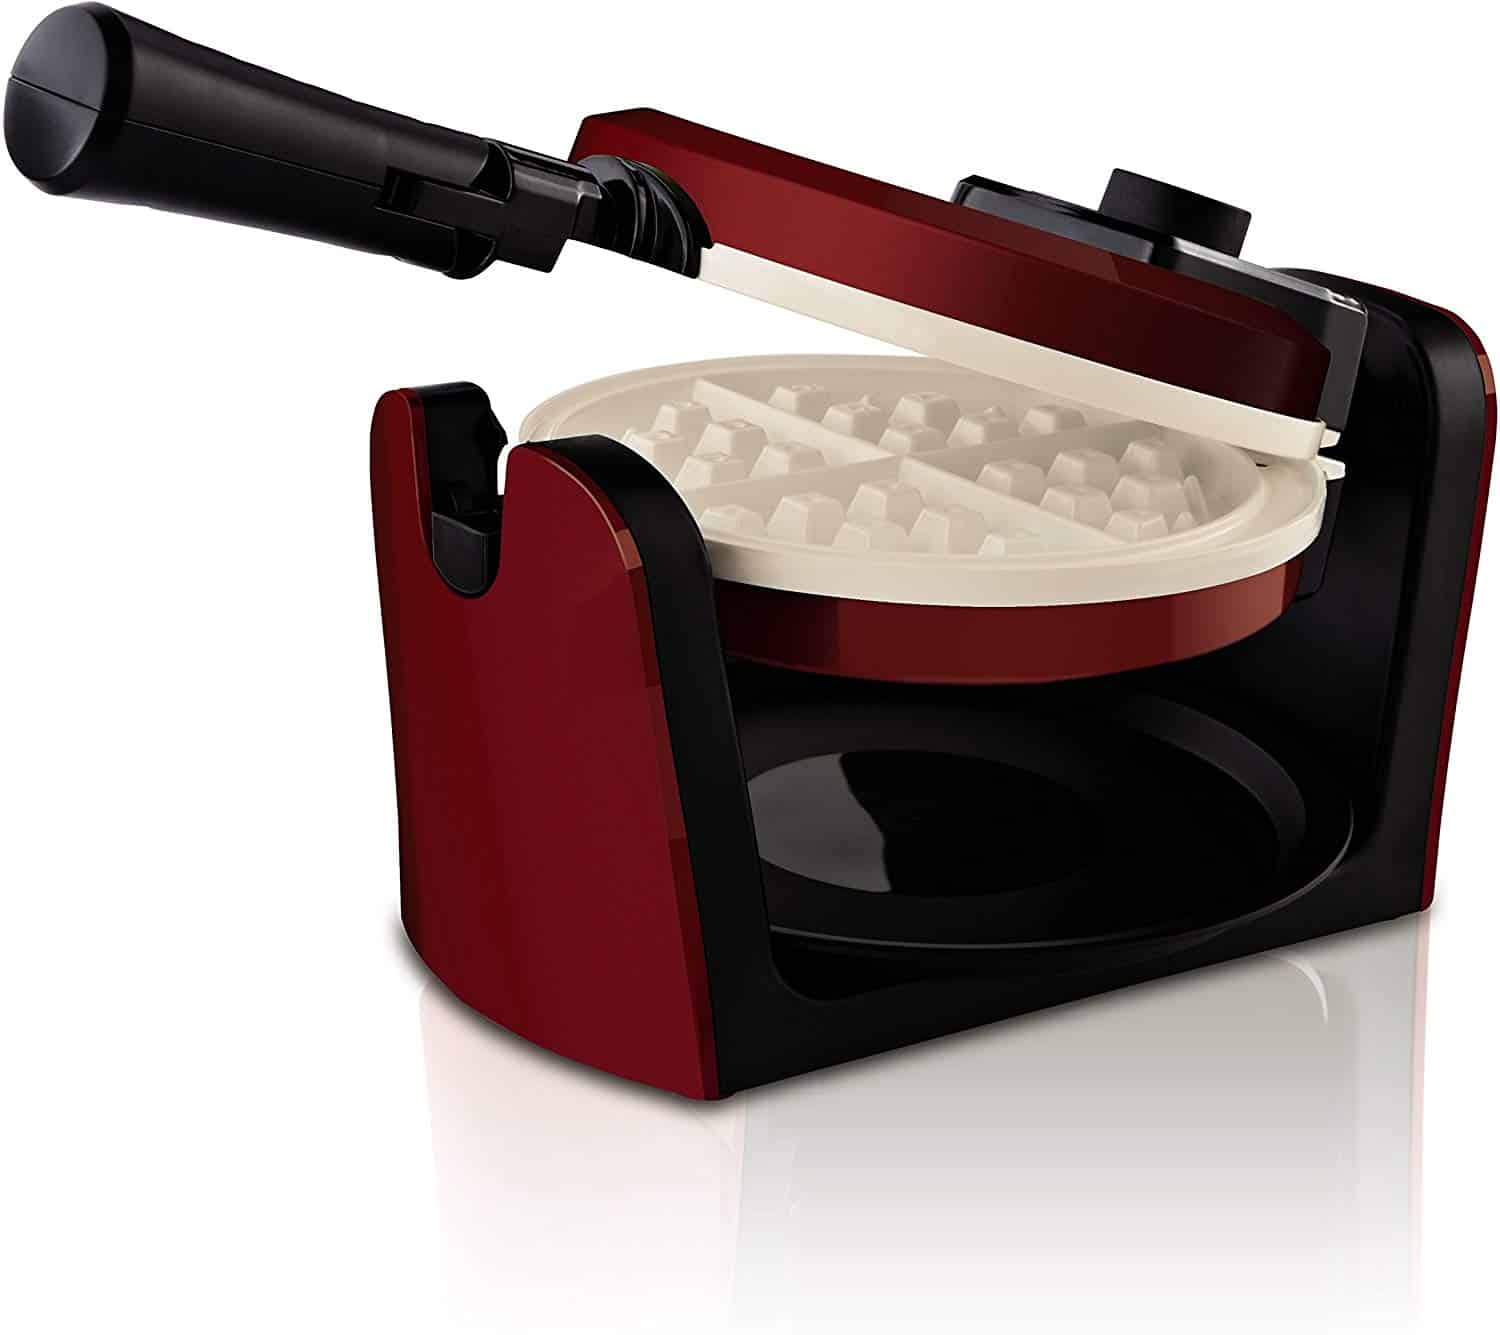 Oster titanium infused duraceramic flip waffle maker